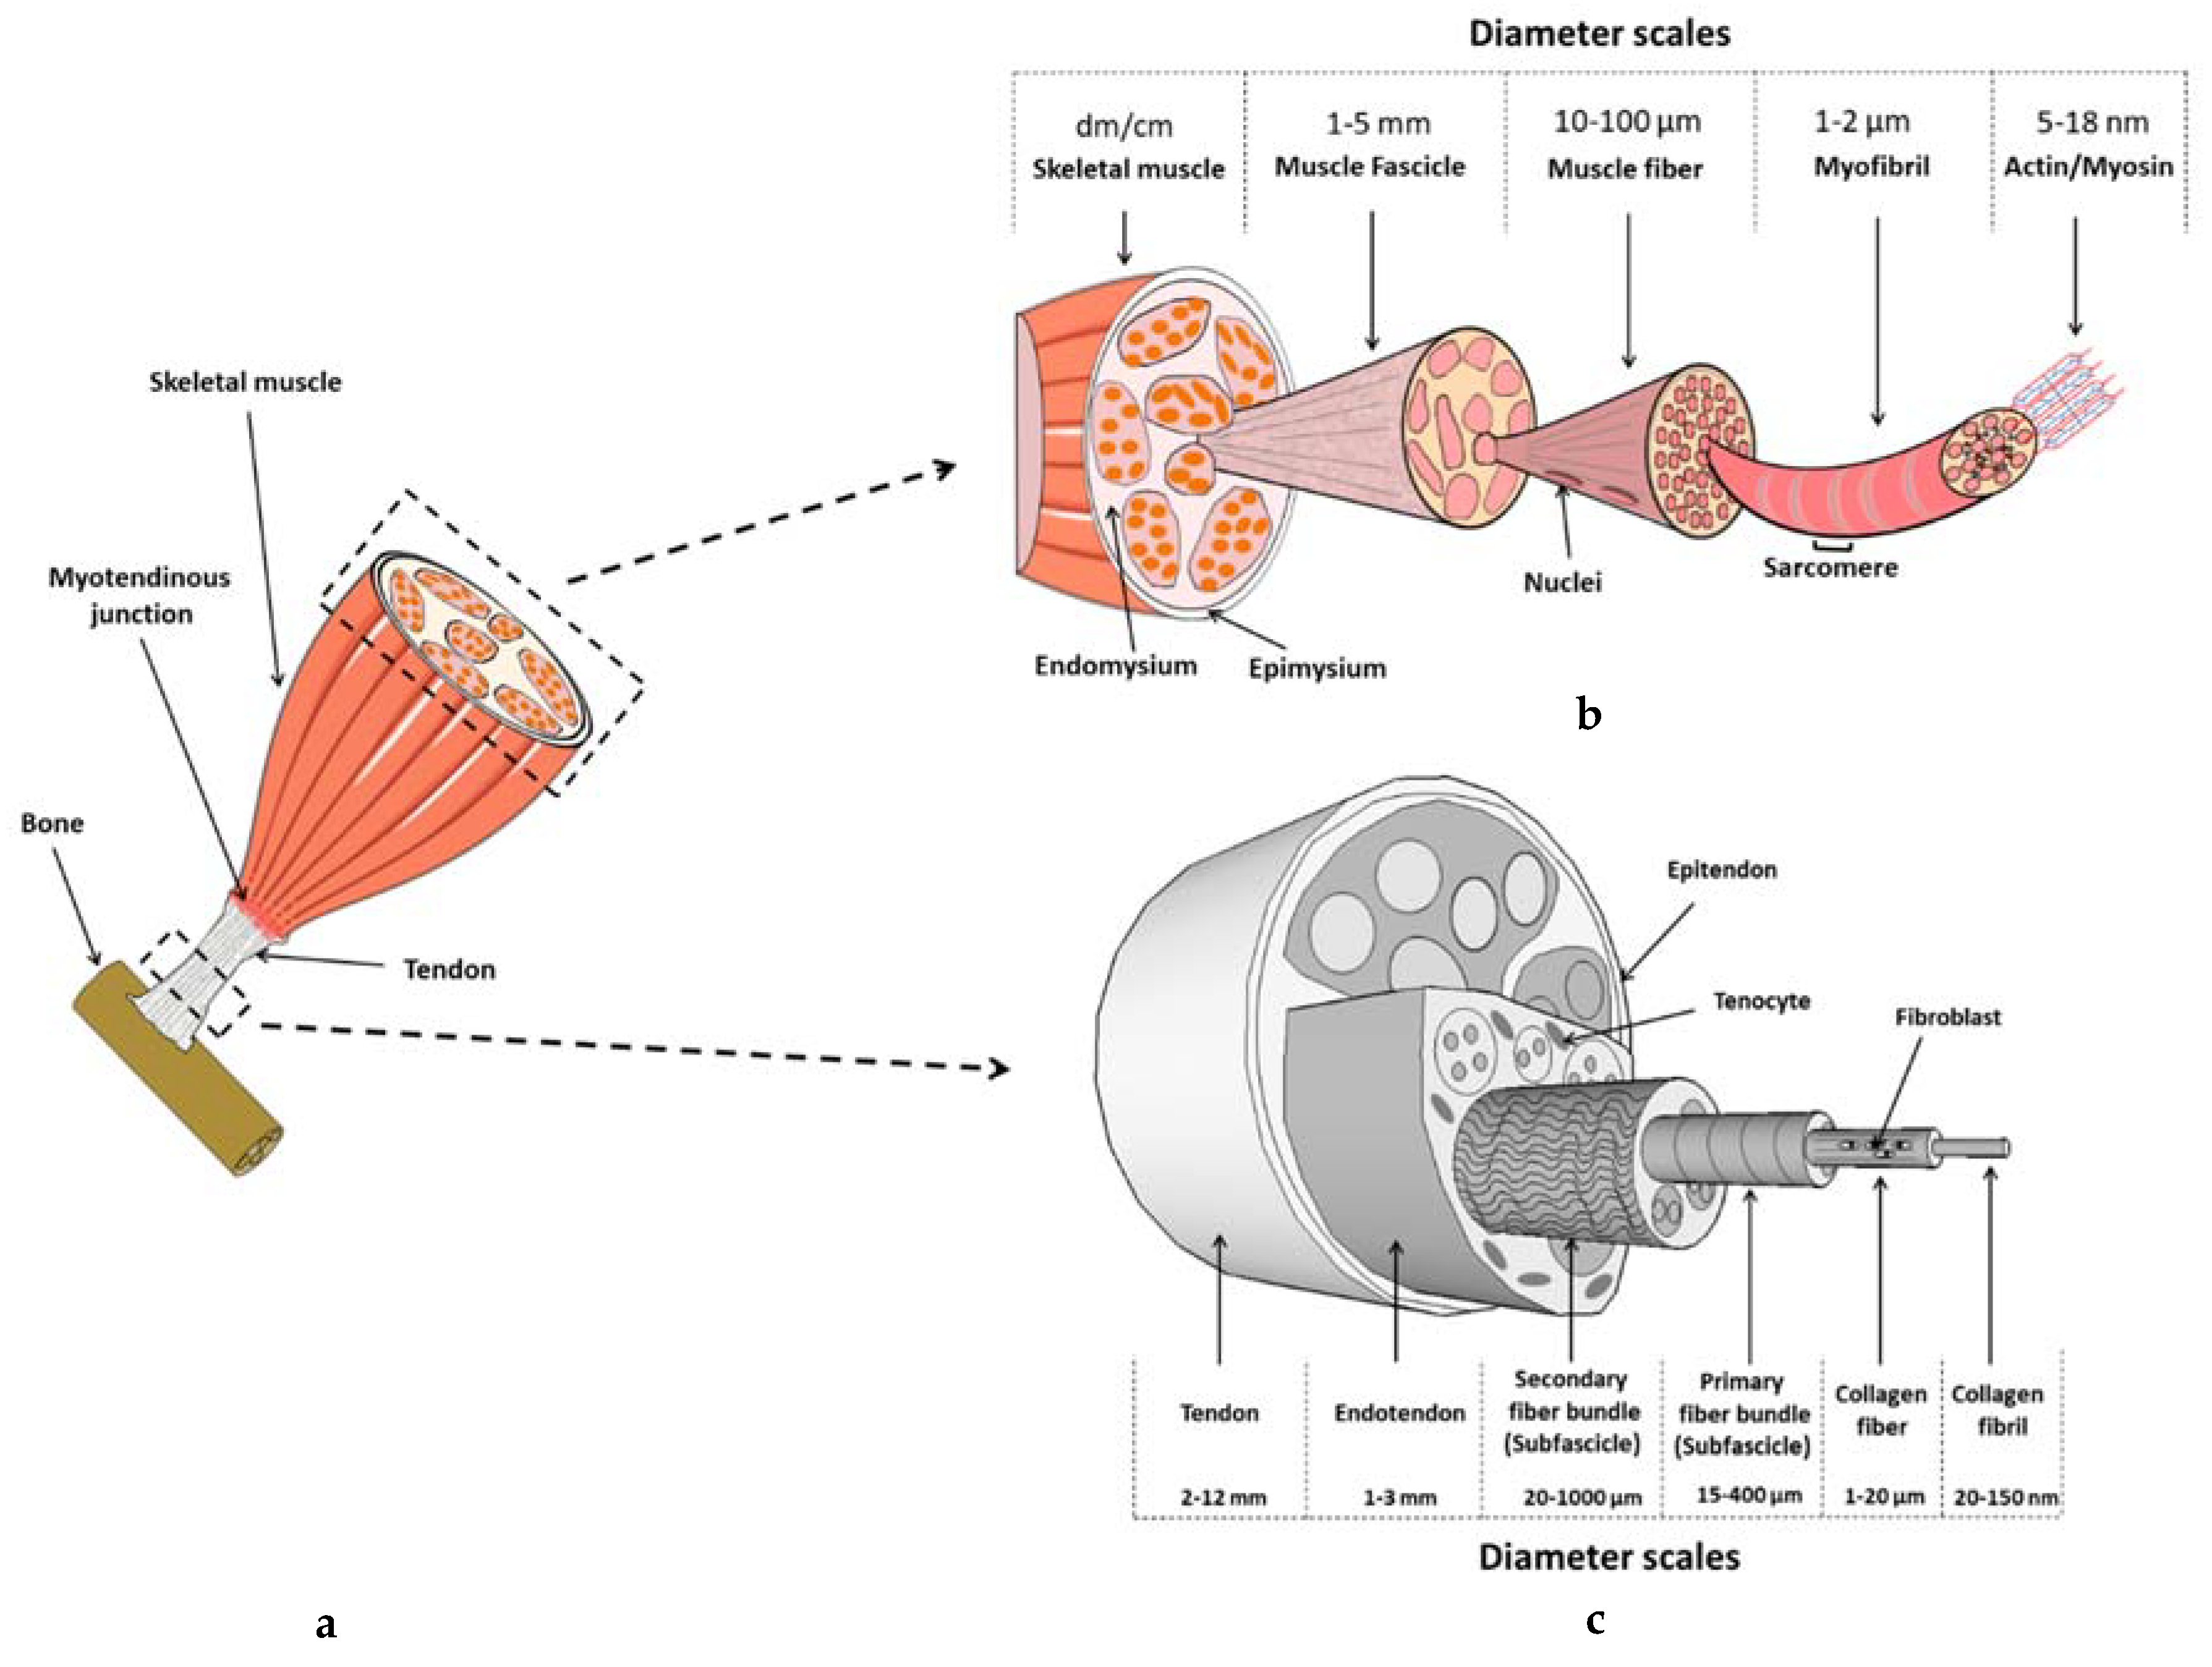 the diagram illustrates a small portion of several myofibrils